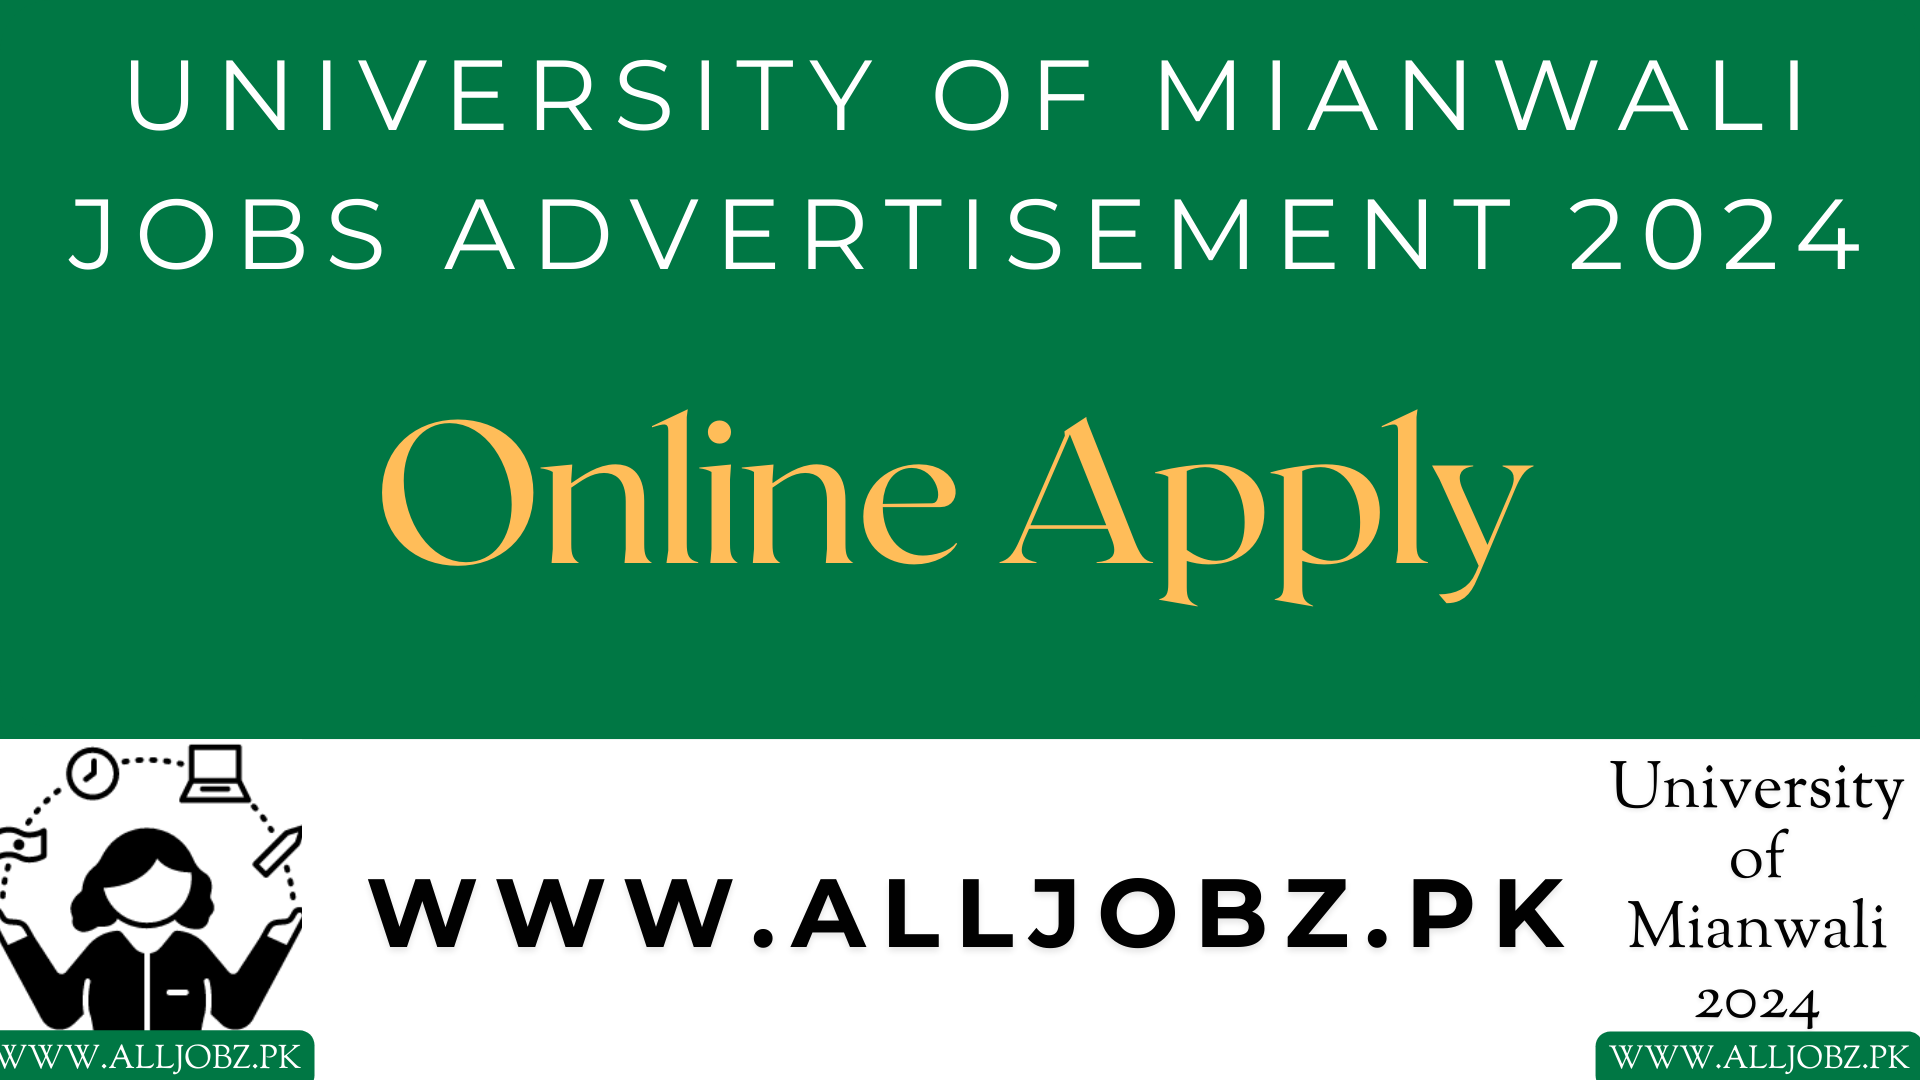 University Of Mianwali Jobs Advertisement Online Apply, University Of Mianwali Jobs For Female,